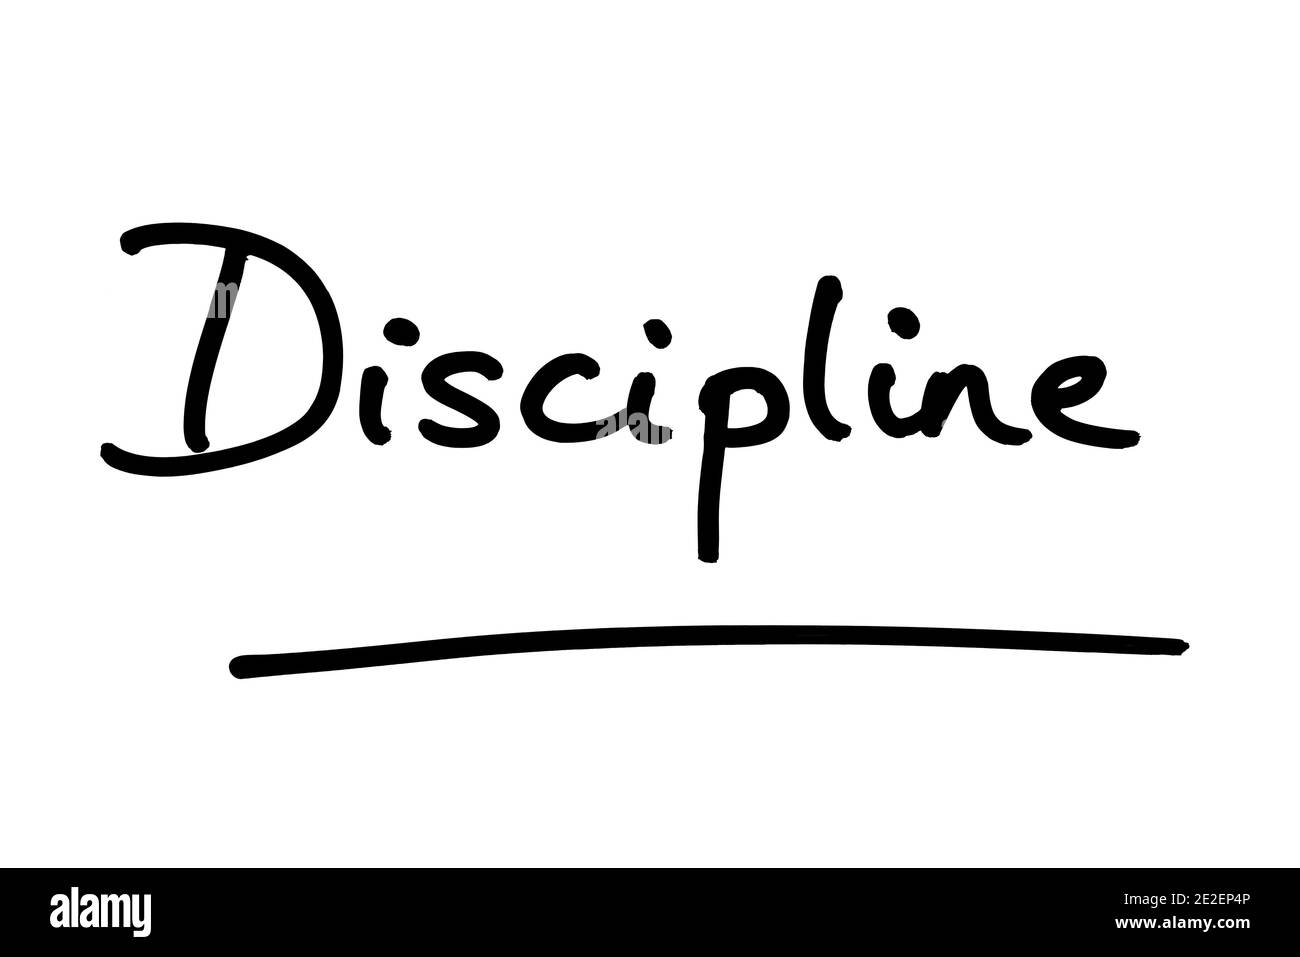 Discipline, handwritten on a white background. Stock Photo